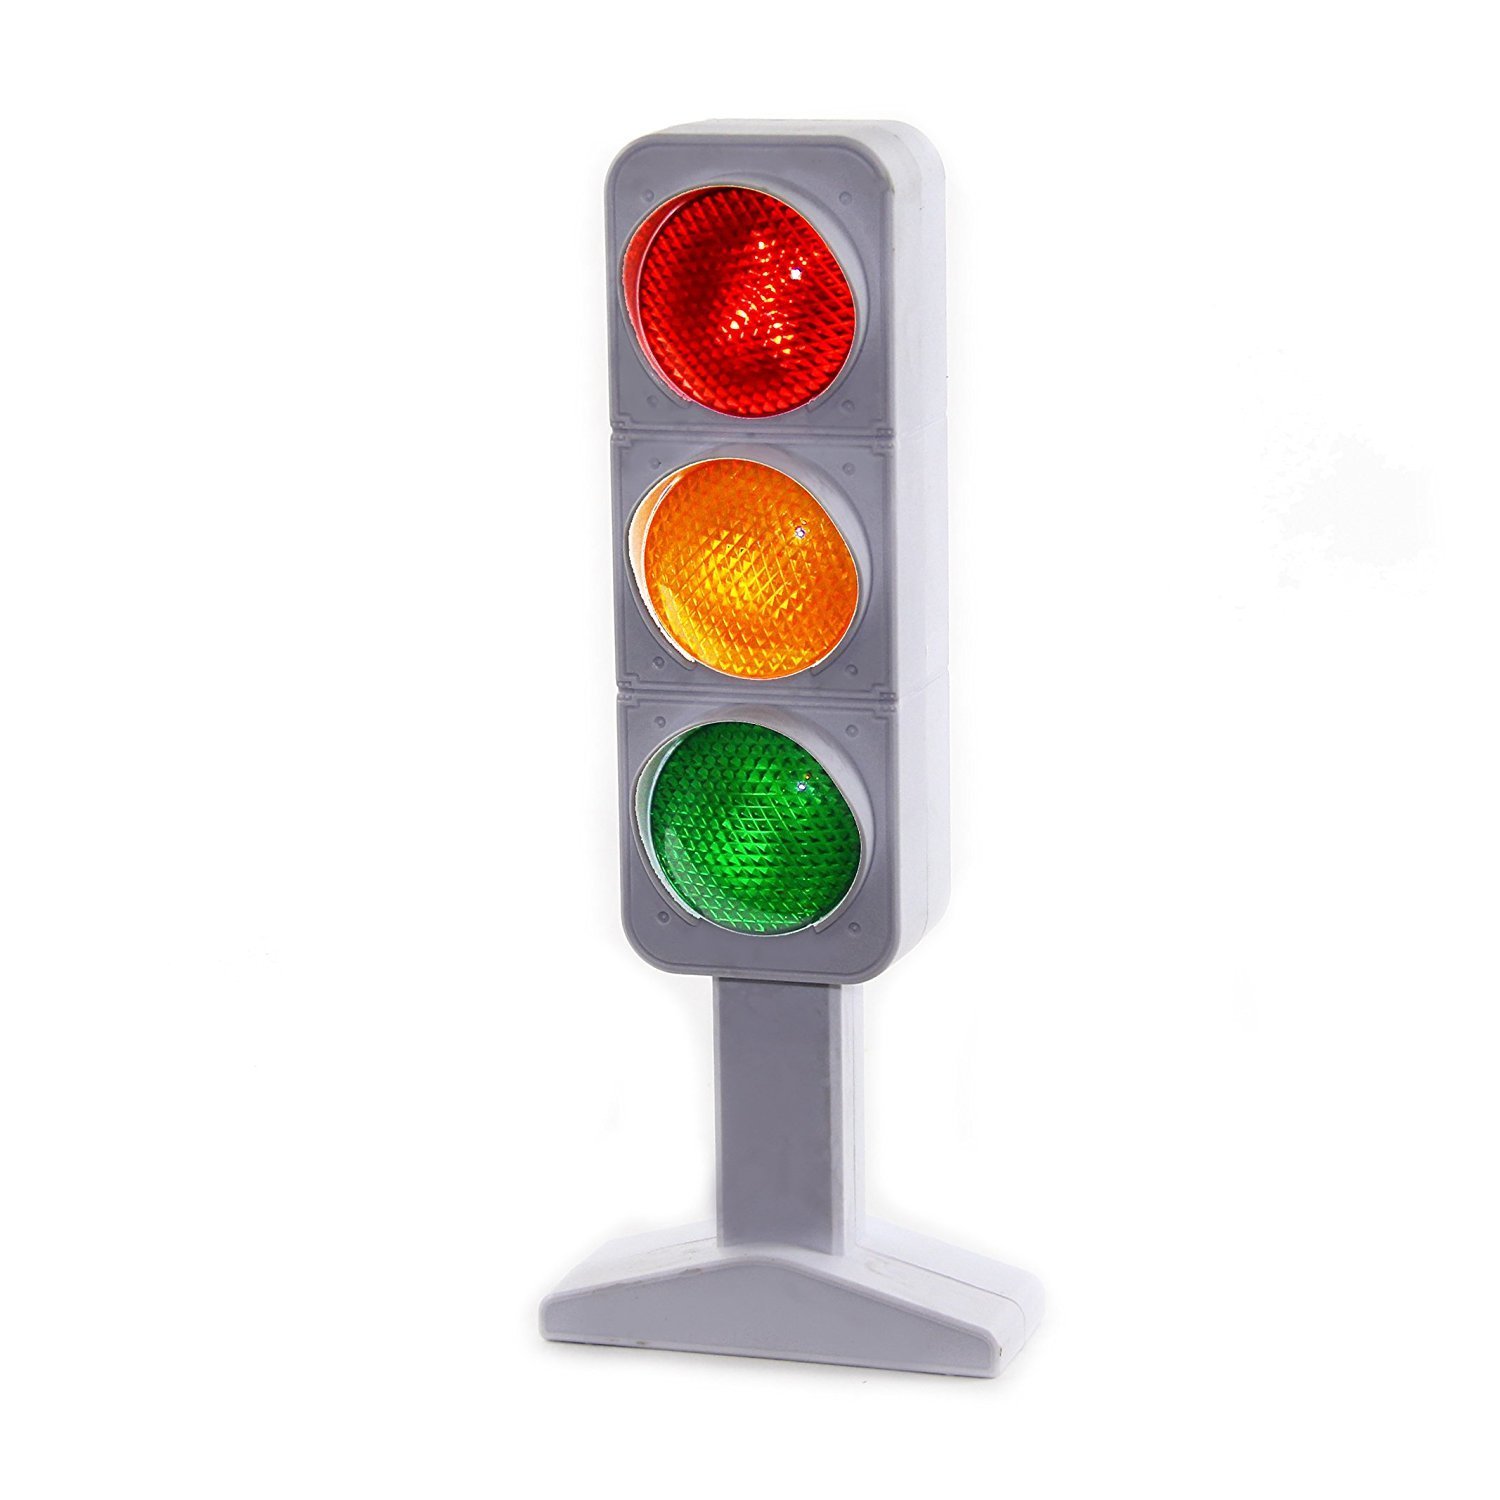 traffic light lamp